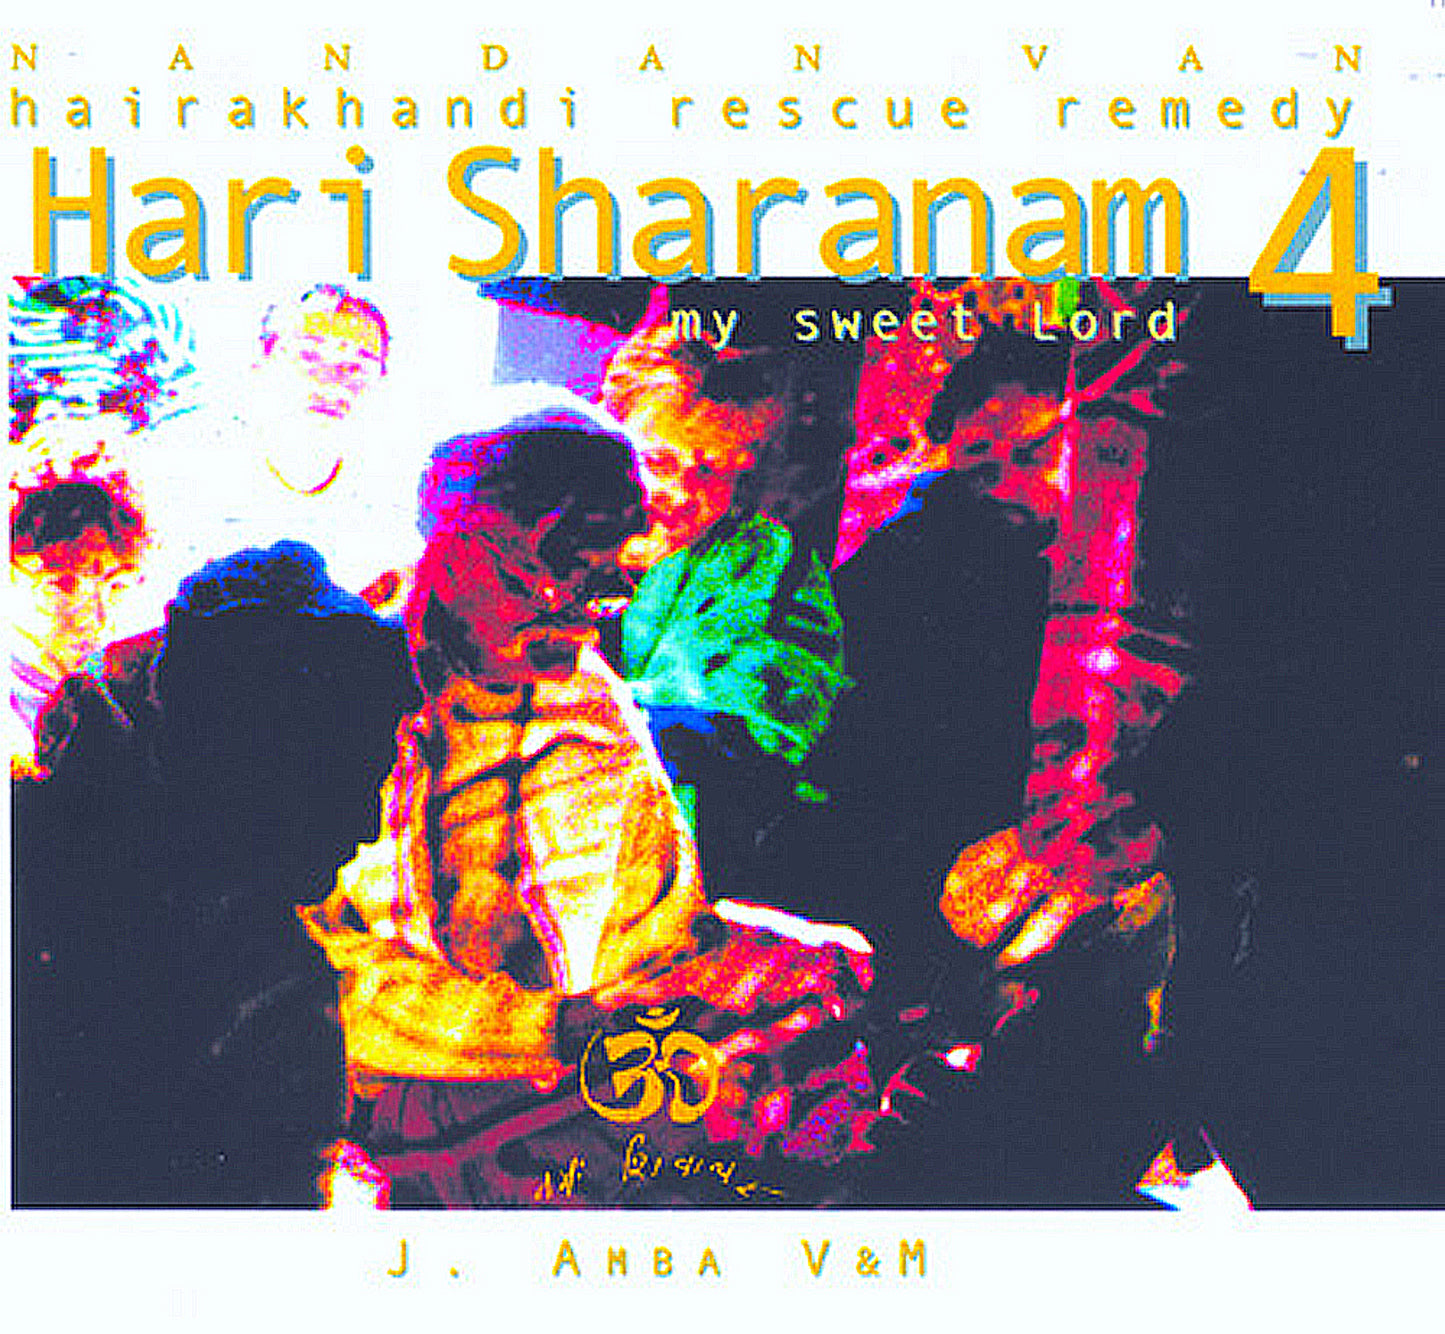 Hari Sharanam, My Sweet Lord, Bhajans - Sanatan Dharma Spirituality Music Therapy for Meditation